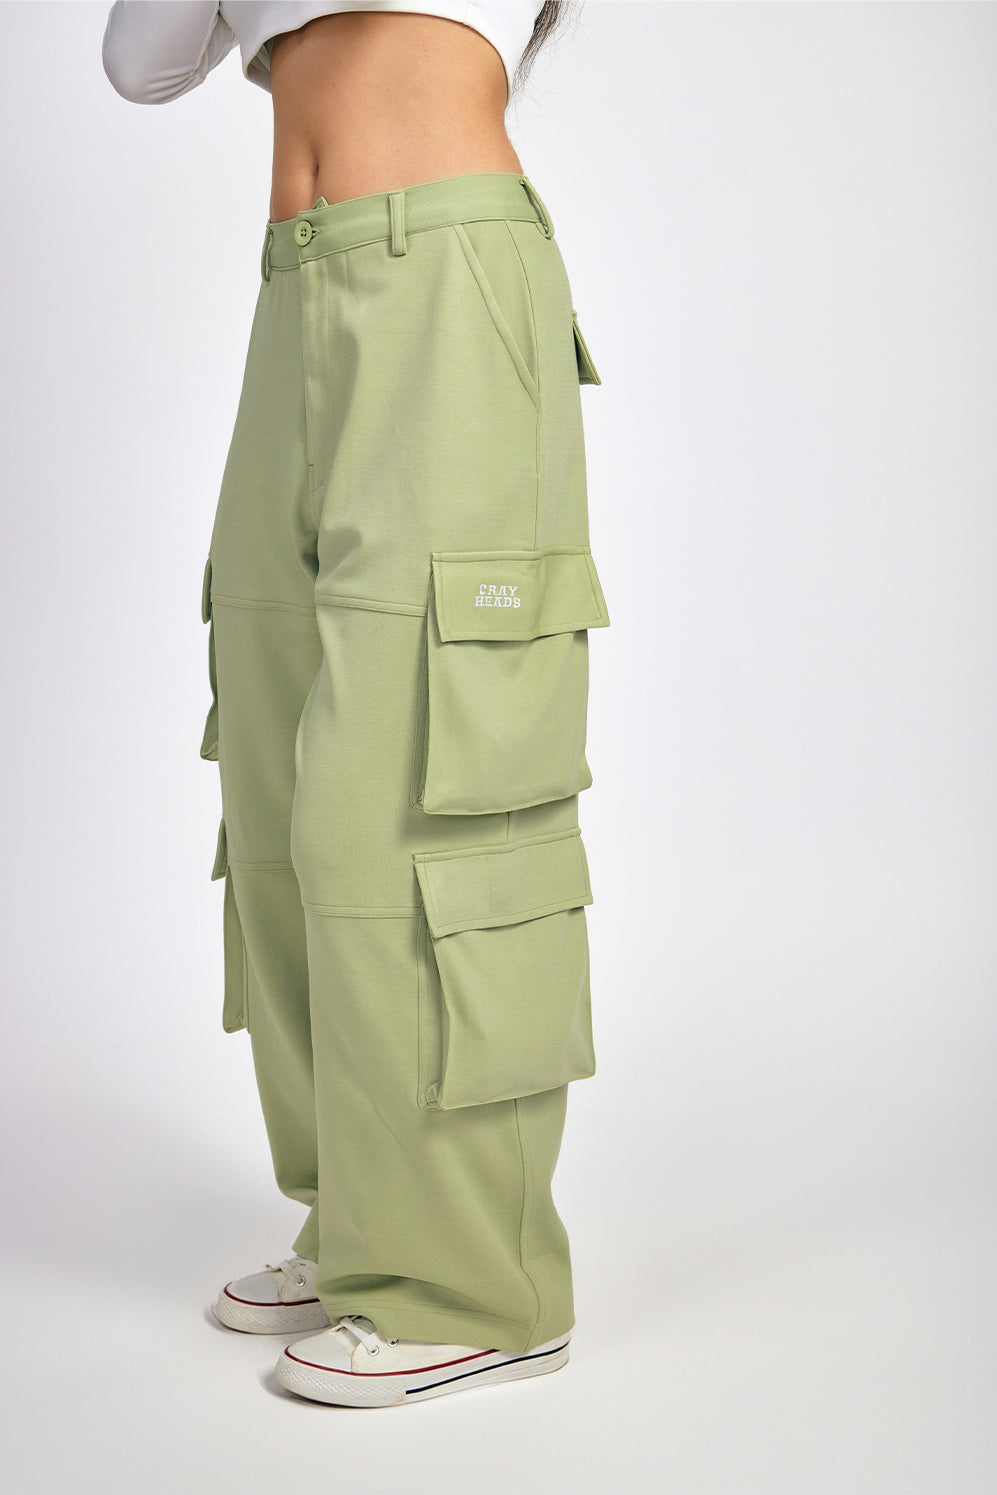 Michael Kors Womens Six Pocket Cargo Pants Smoky Olive Size 2 New | Cargo  pants, Cargo pants style, Pants